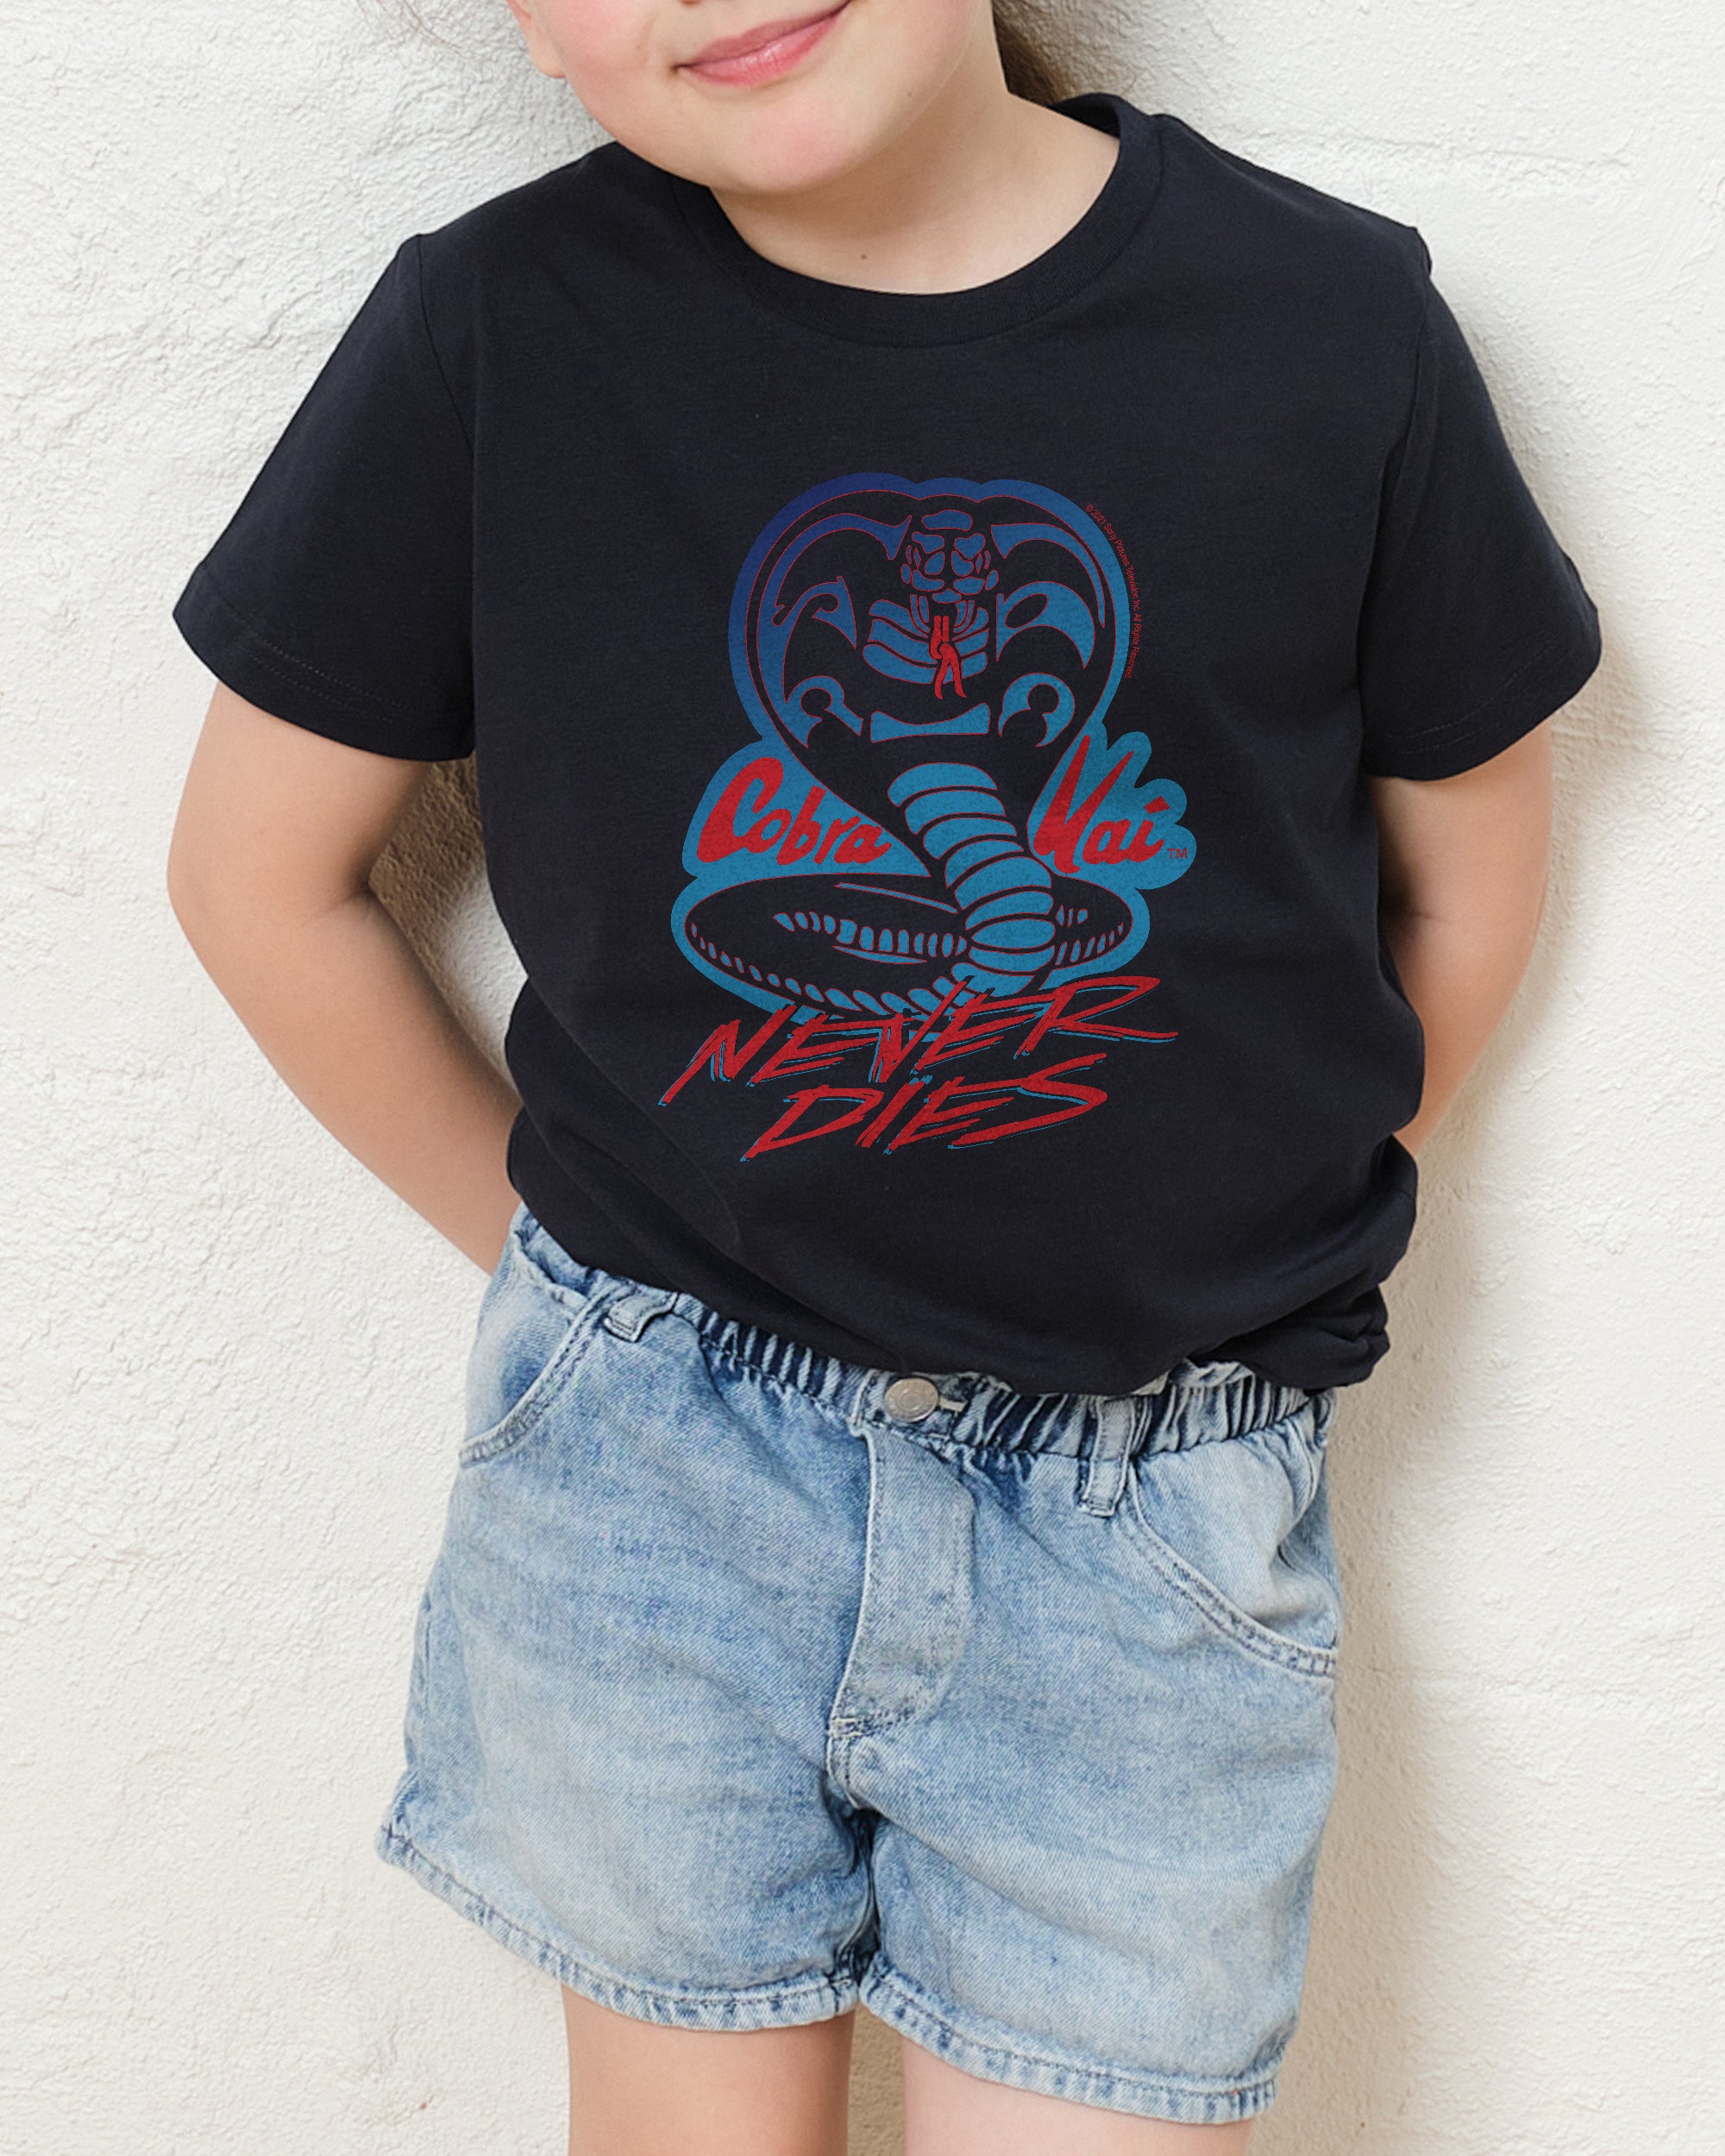 Cobra Kai Never Dies Kids T-Shirt